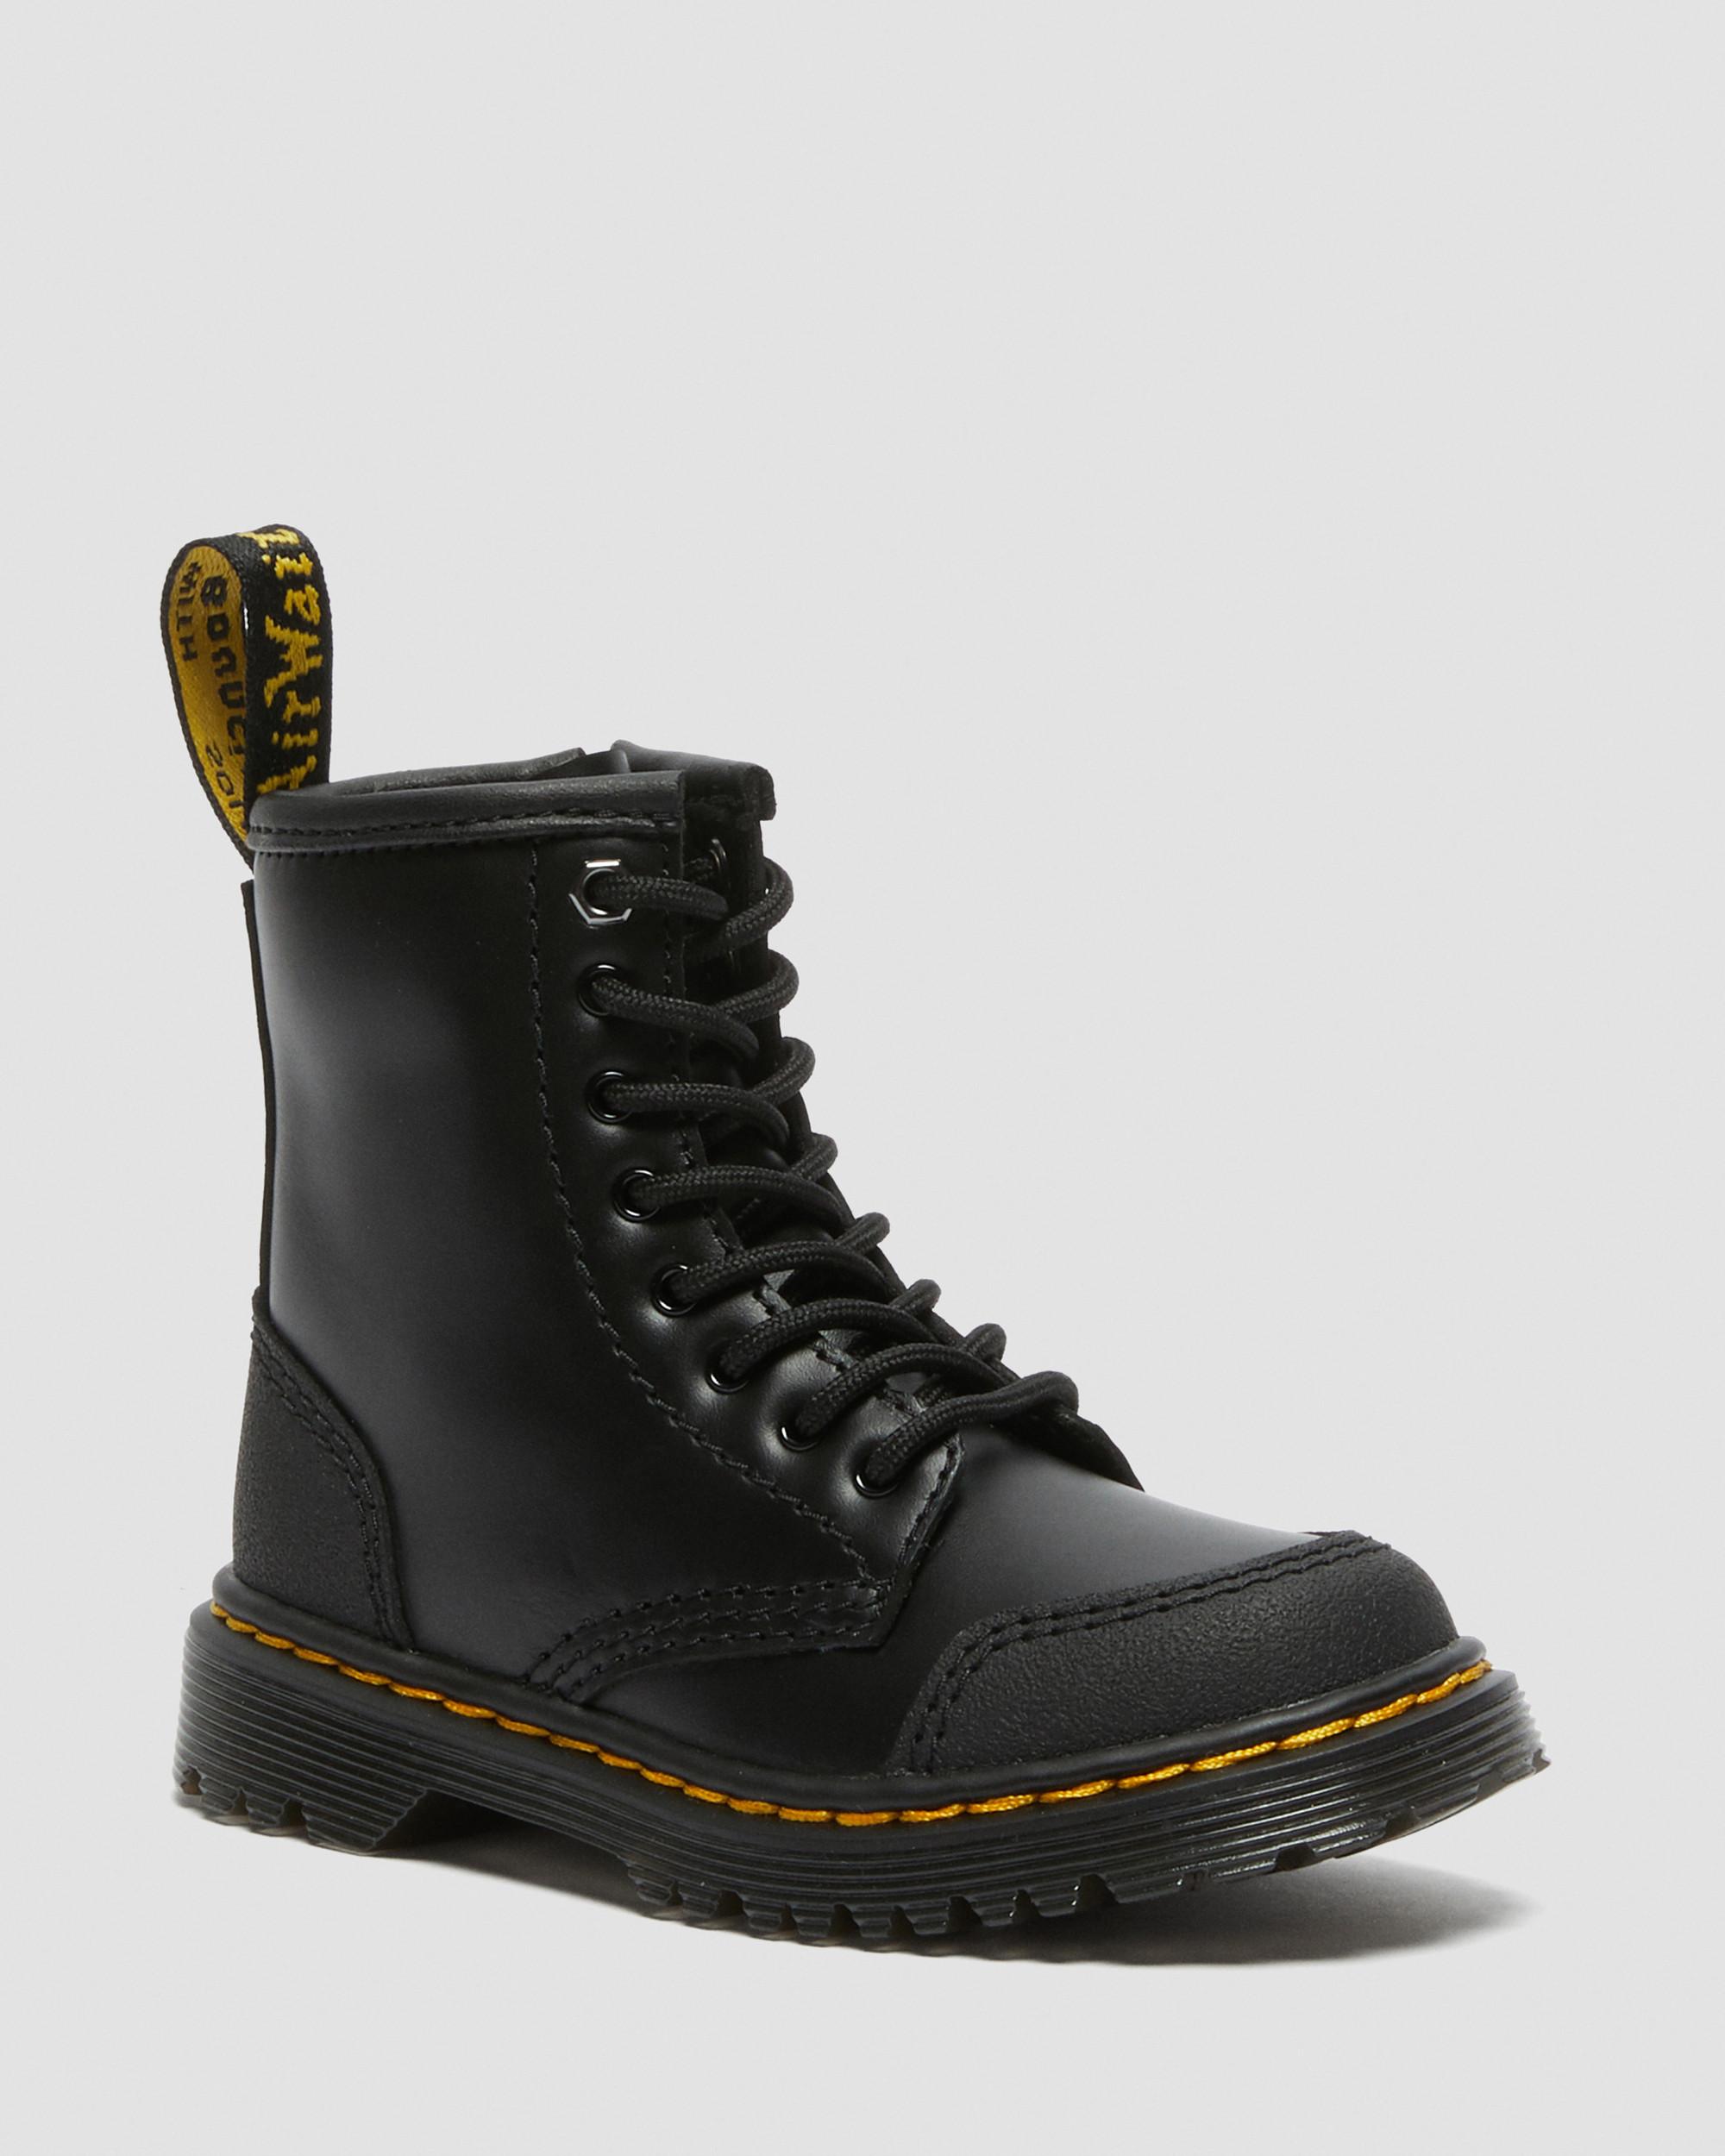 Toddler 1460 Overlay Leather Boots, Black | Dr. Martens